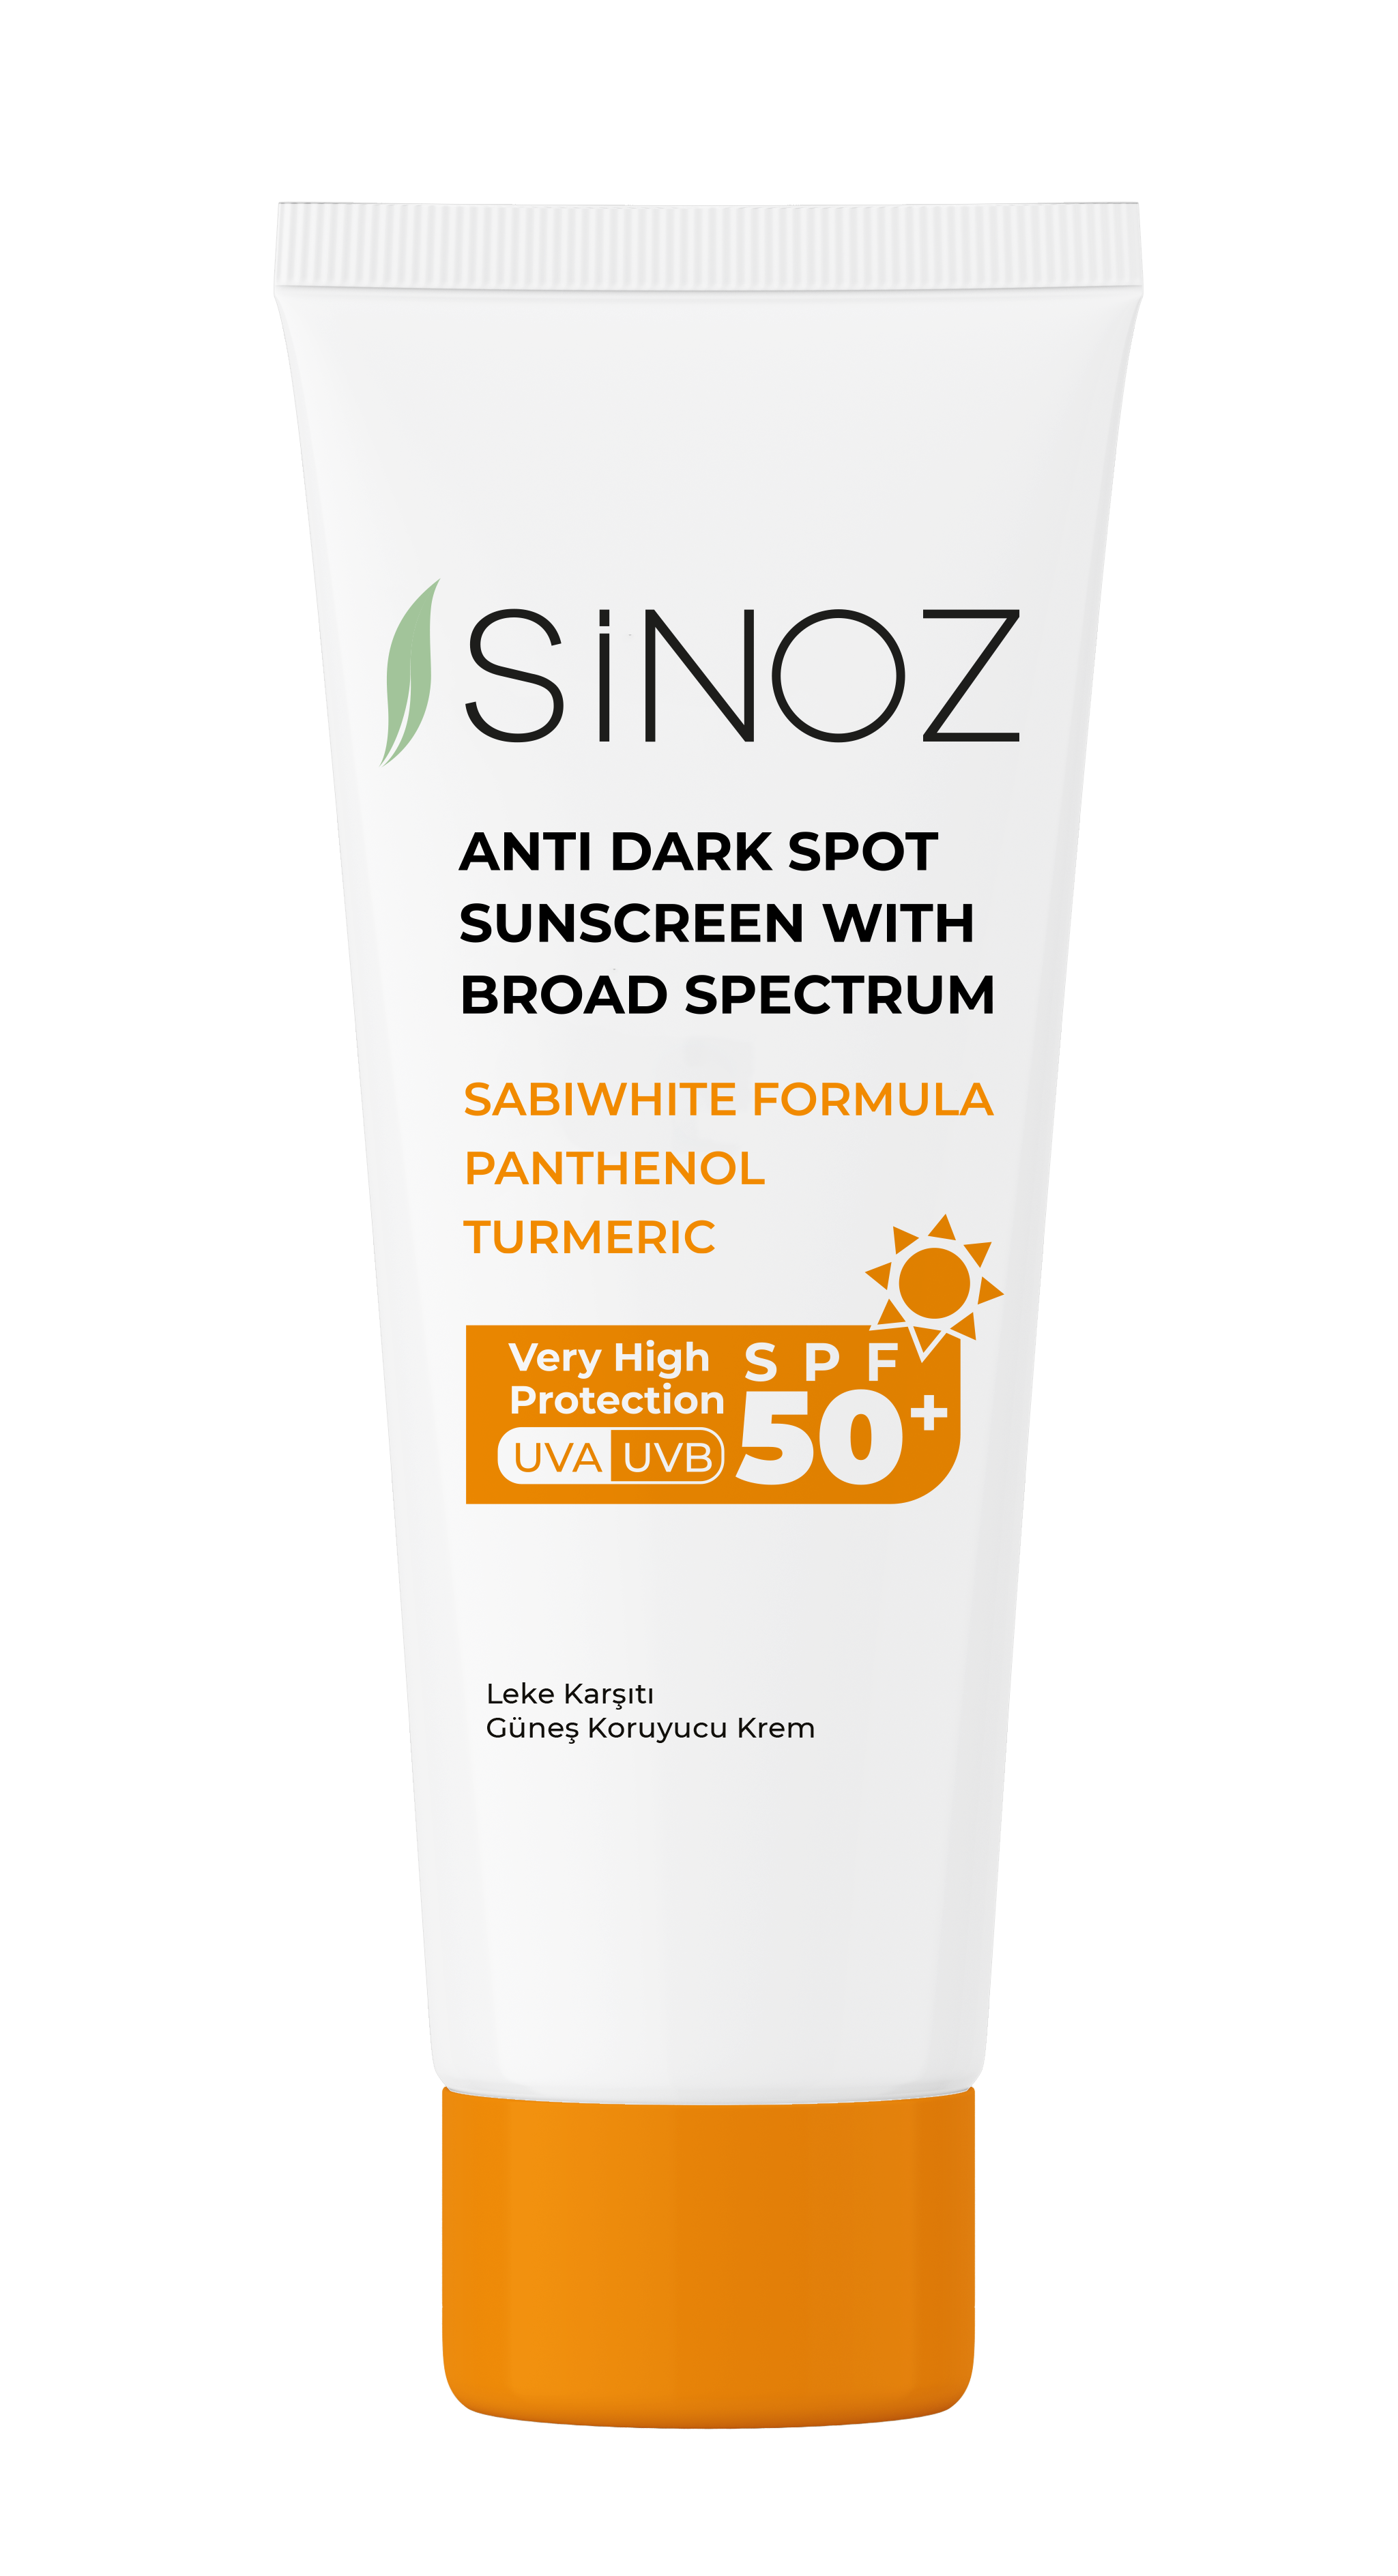 Sinoz Anti Dark Spot Sunscreen SPF 50+